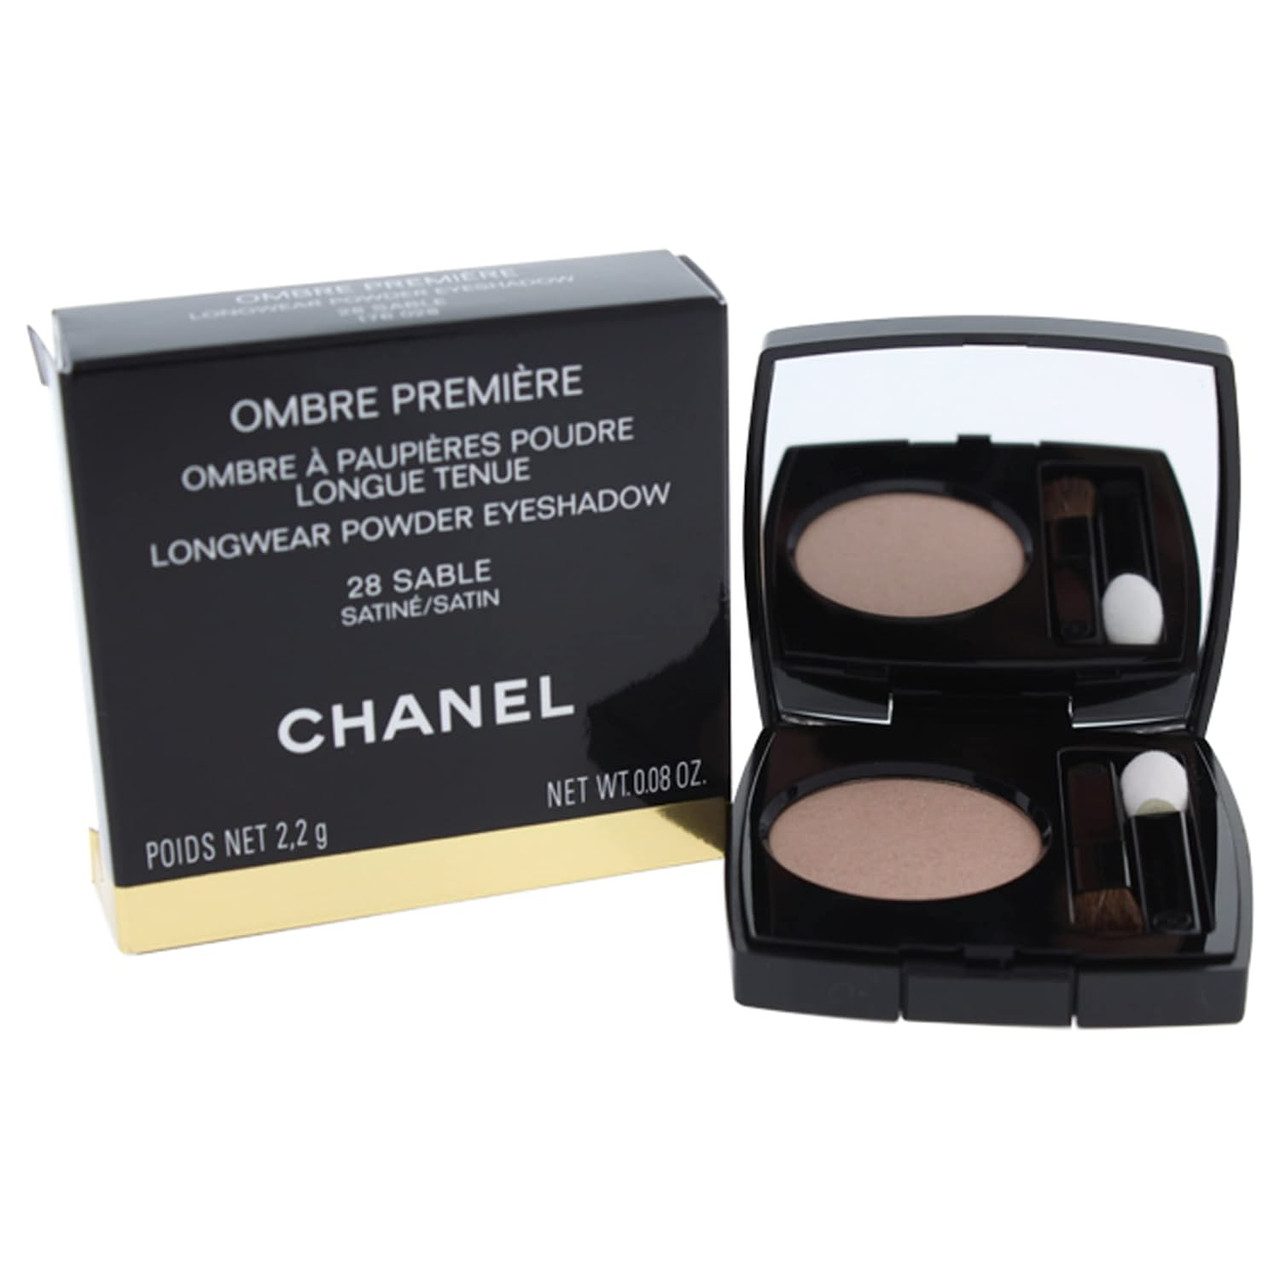 Chanel Ombre Premiere Longwear Cream Eyeshadow - 802 Undertone Eye Shadow  0.14